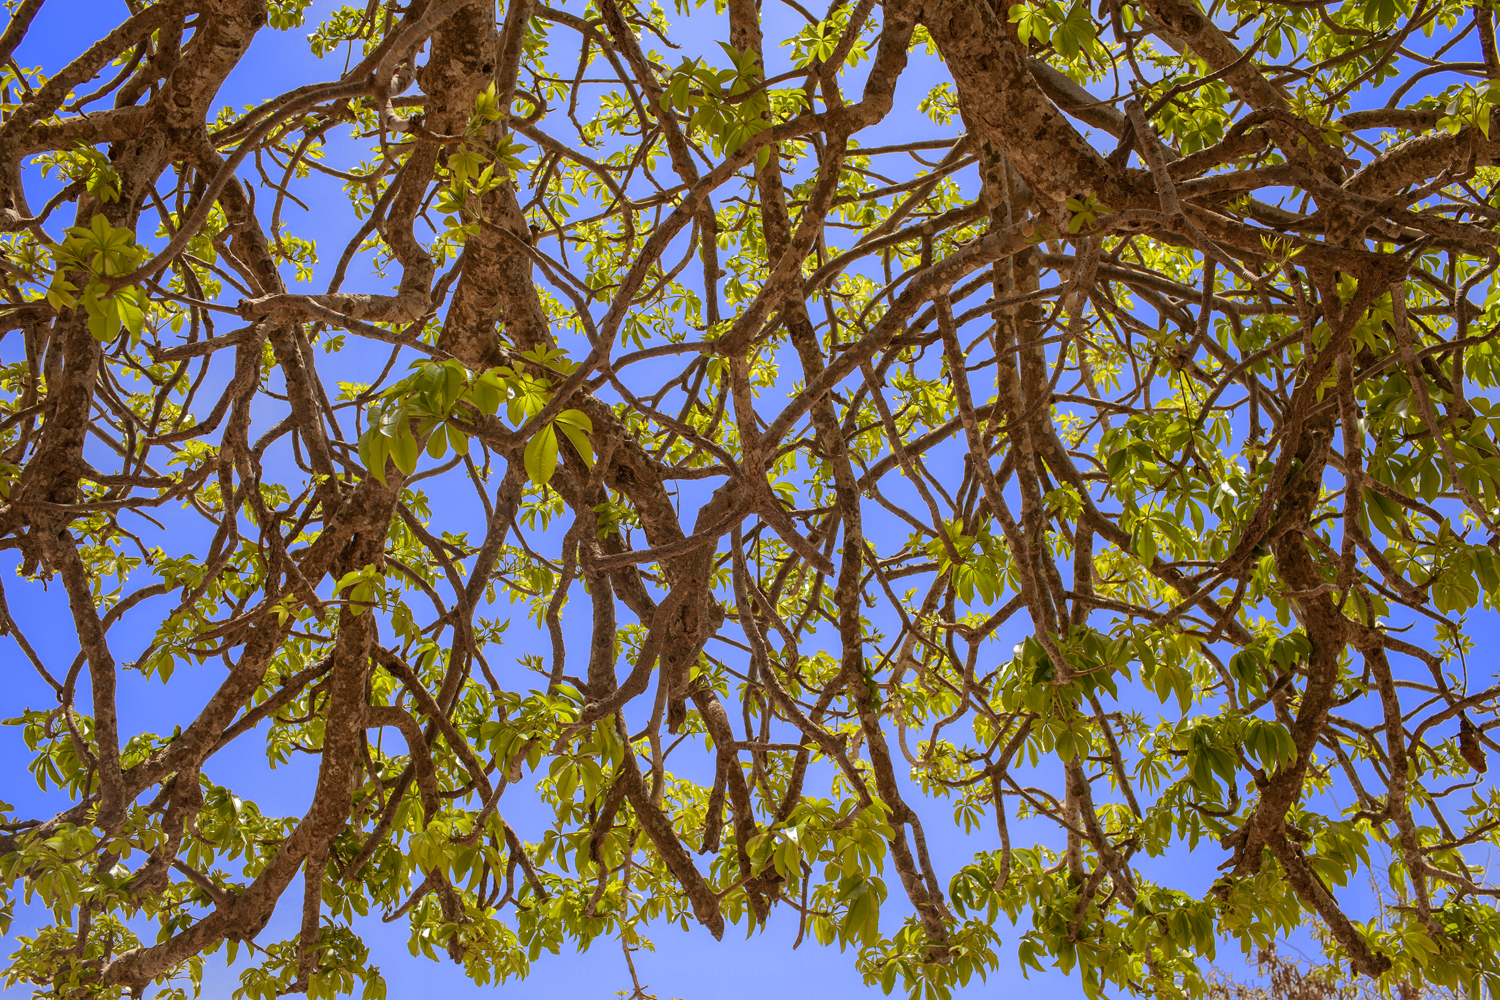 under_the Baobab_Tree_Gorée_Island_Senegal_NIK_filter_2019_3762.jpg